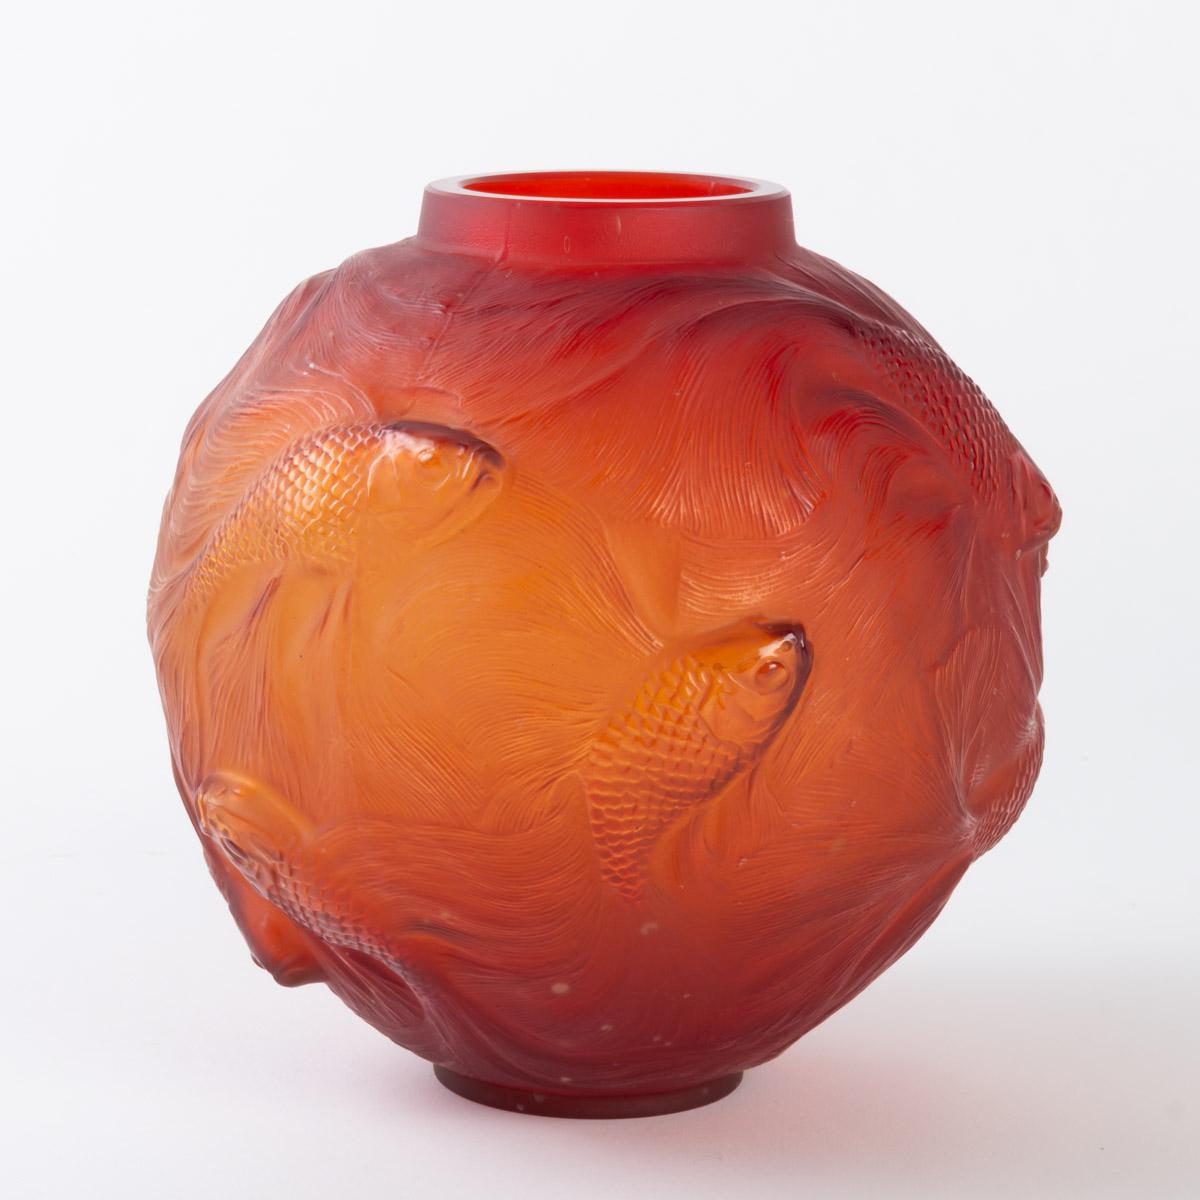 Molded 1924 Rene Lalique Formose Vase in Double Cased Red Orange Glass, Fishes Design